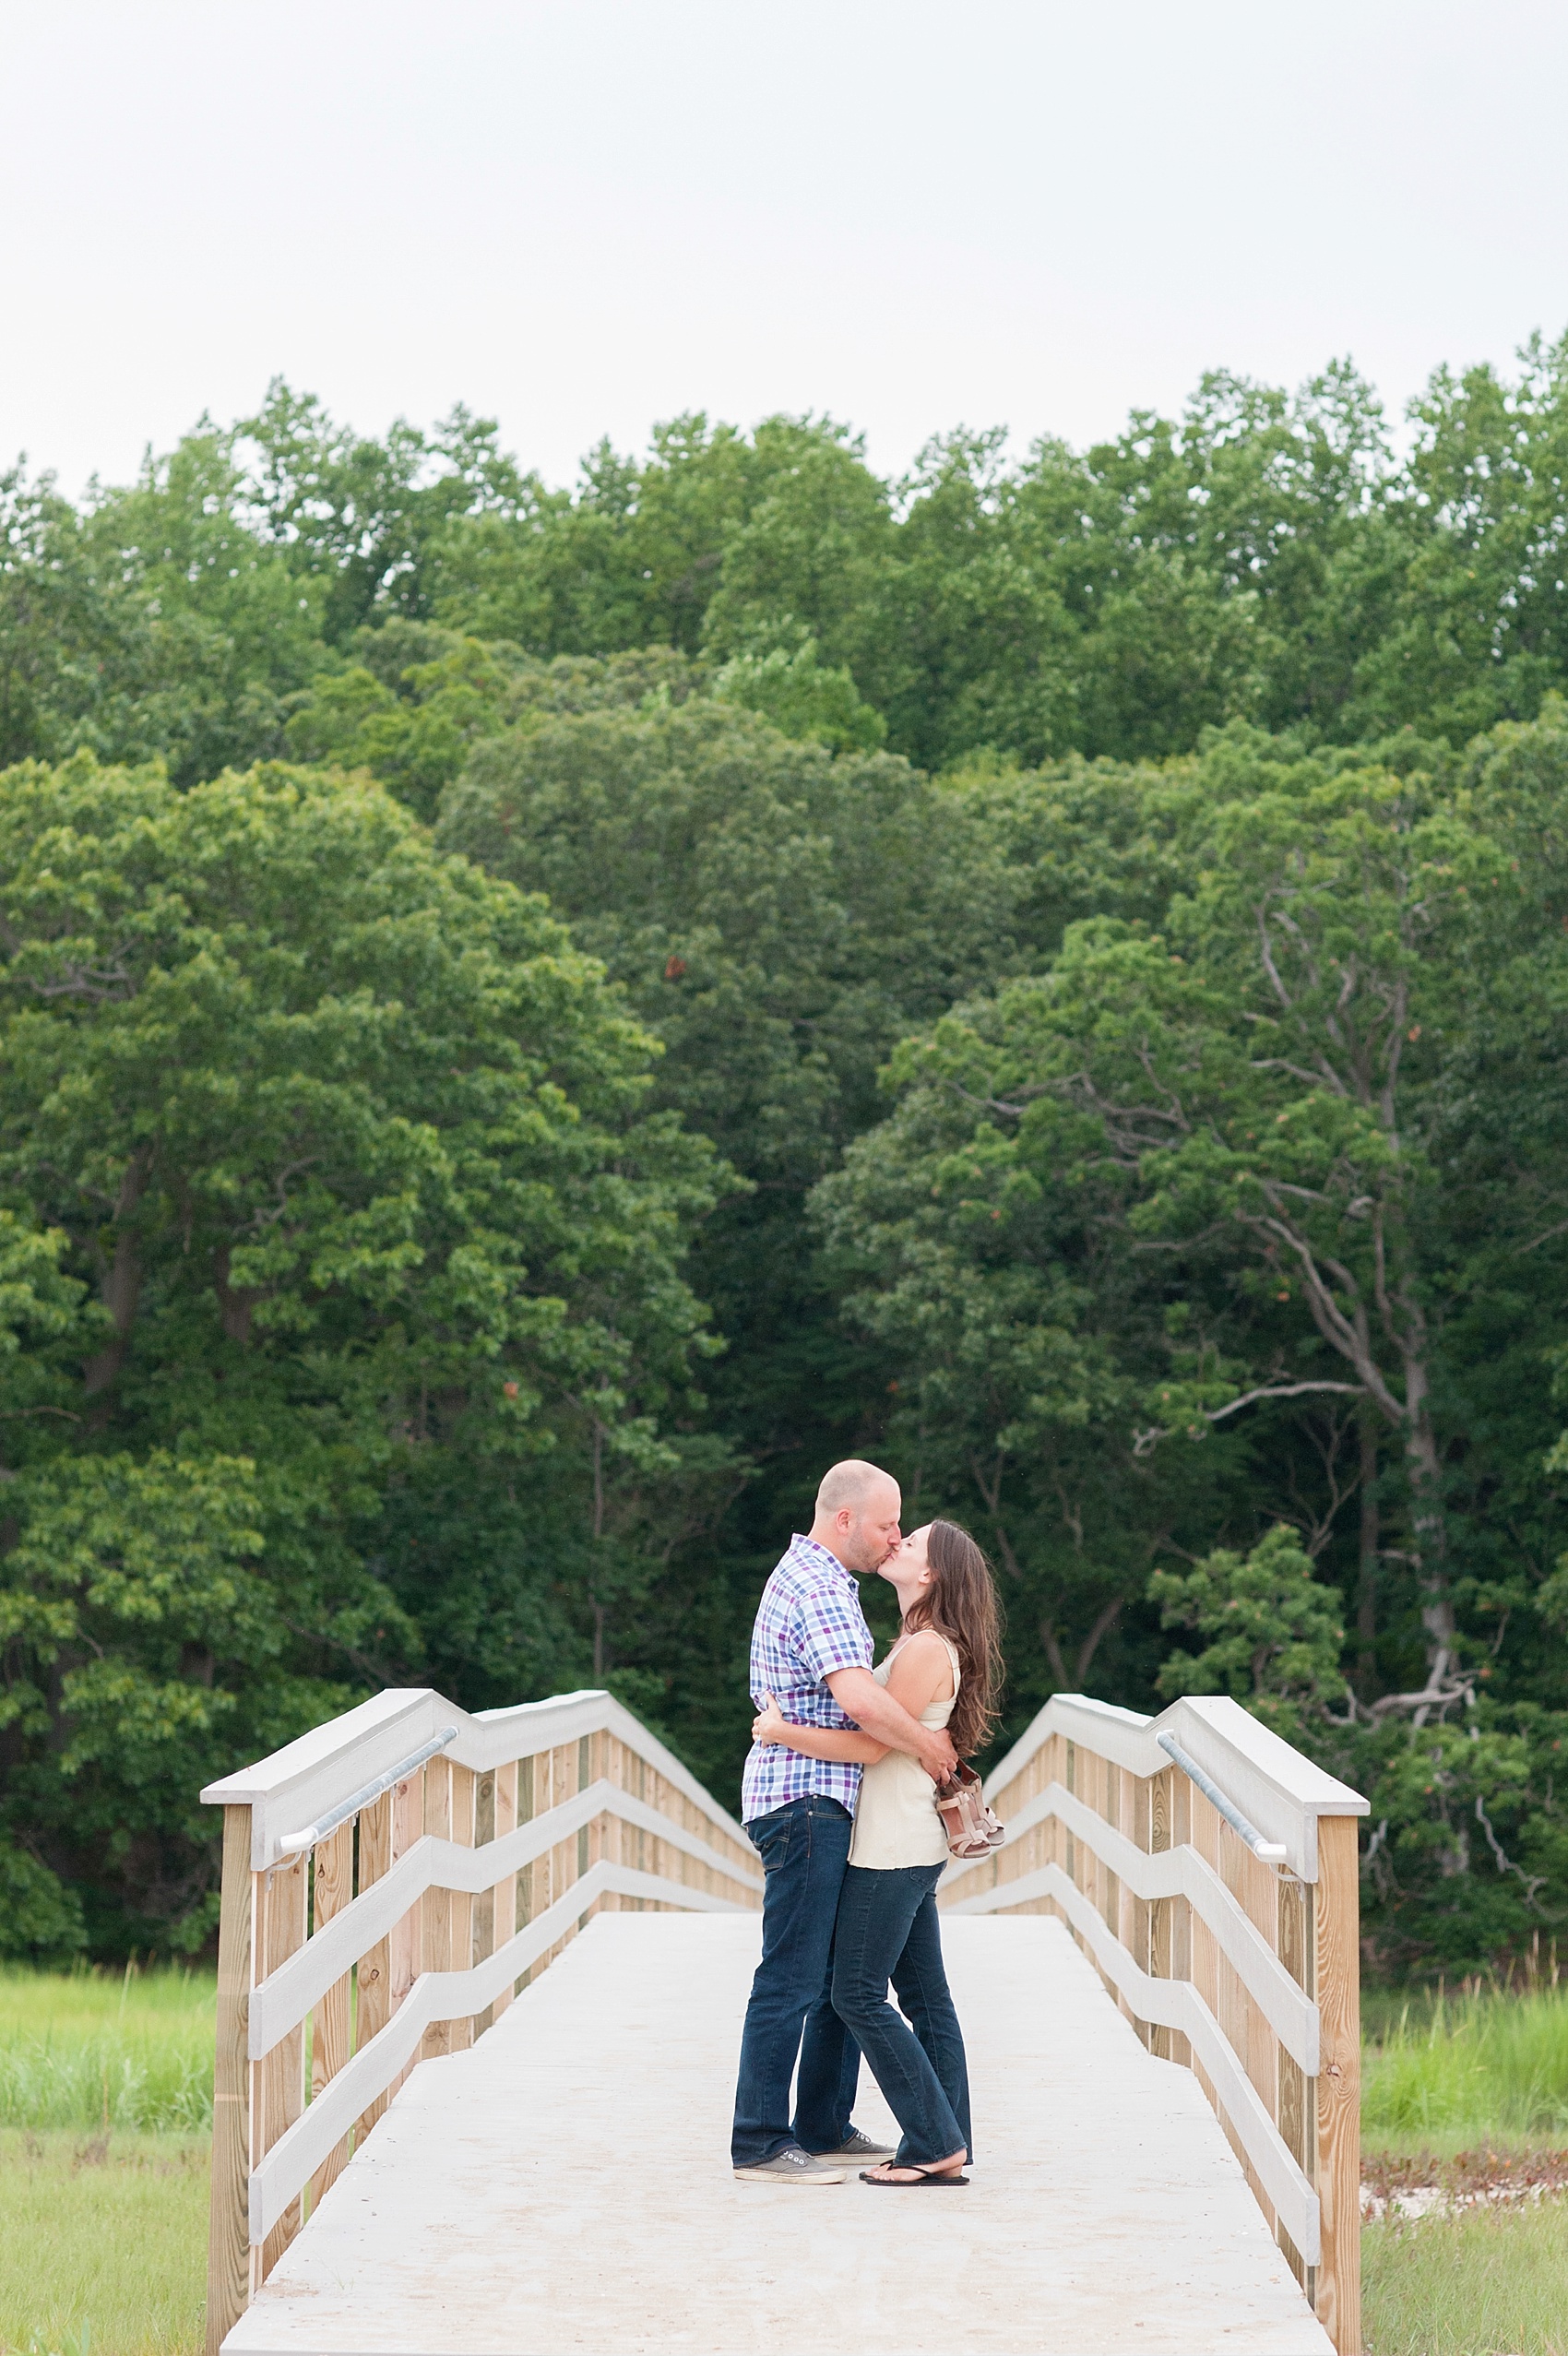 Sagamore Hill, Long Island New York engagement photos. By Long Island wedding photographer, Mikkel Paige Photography.